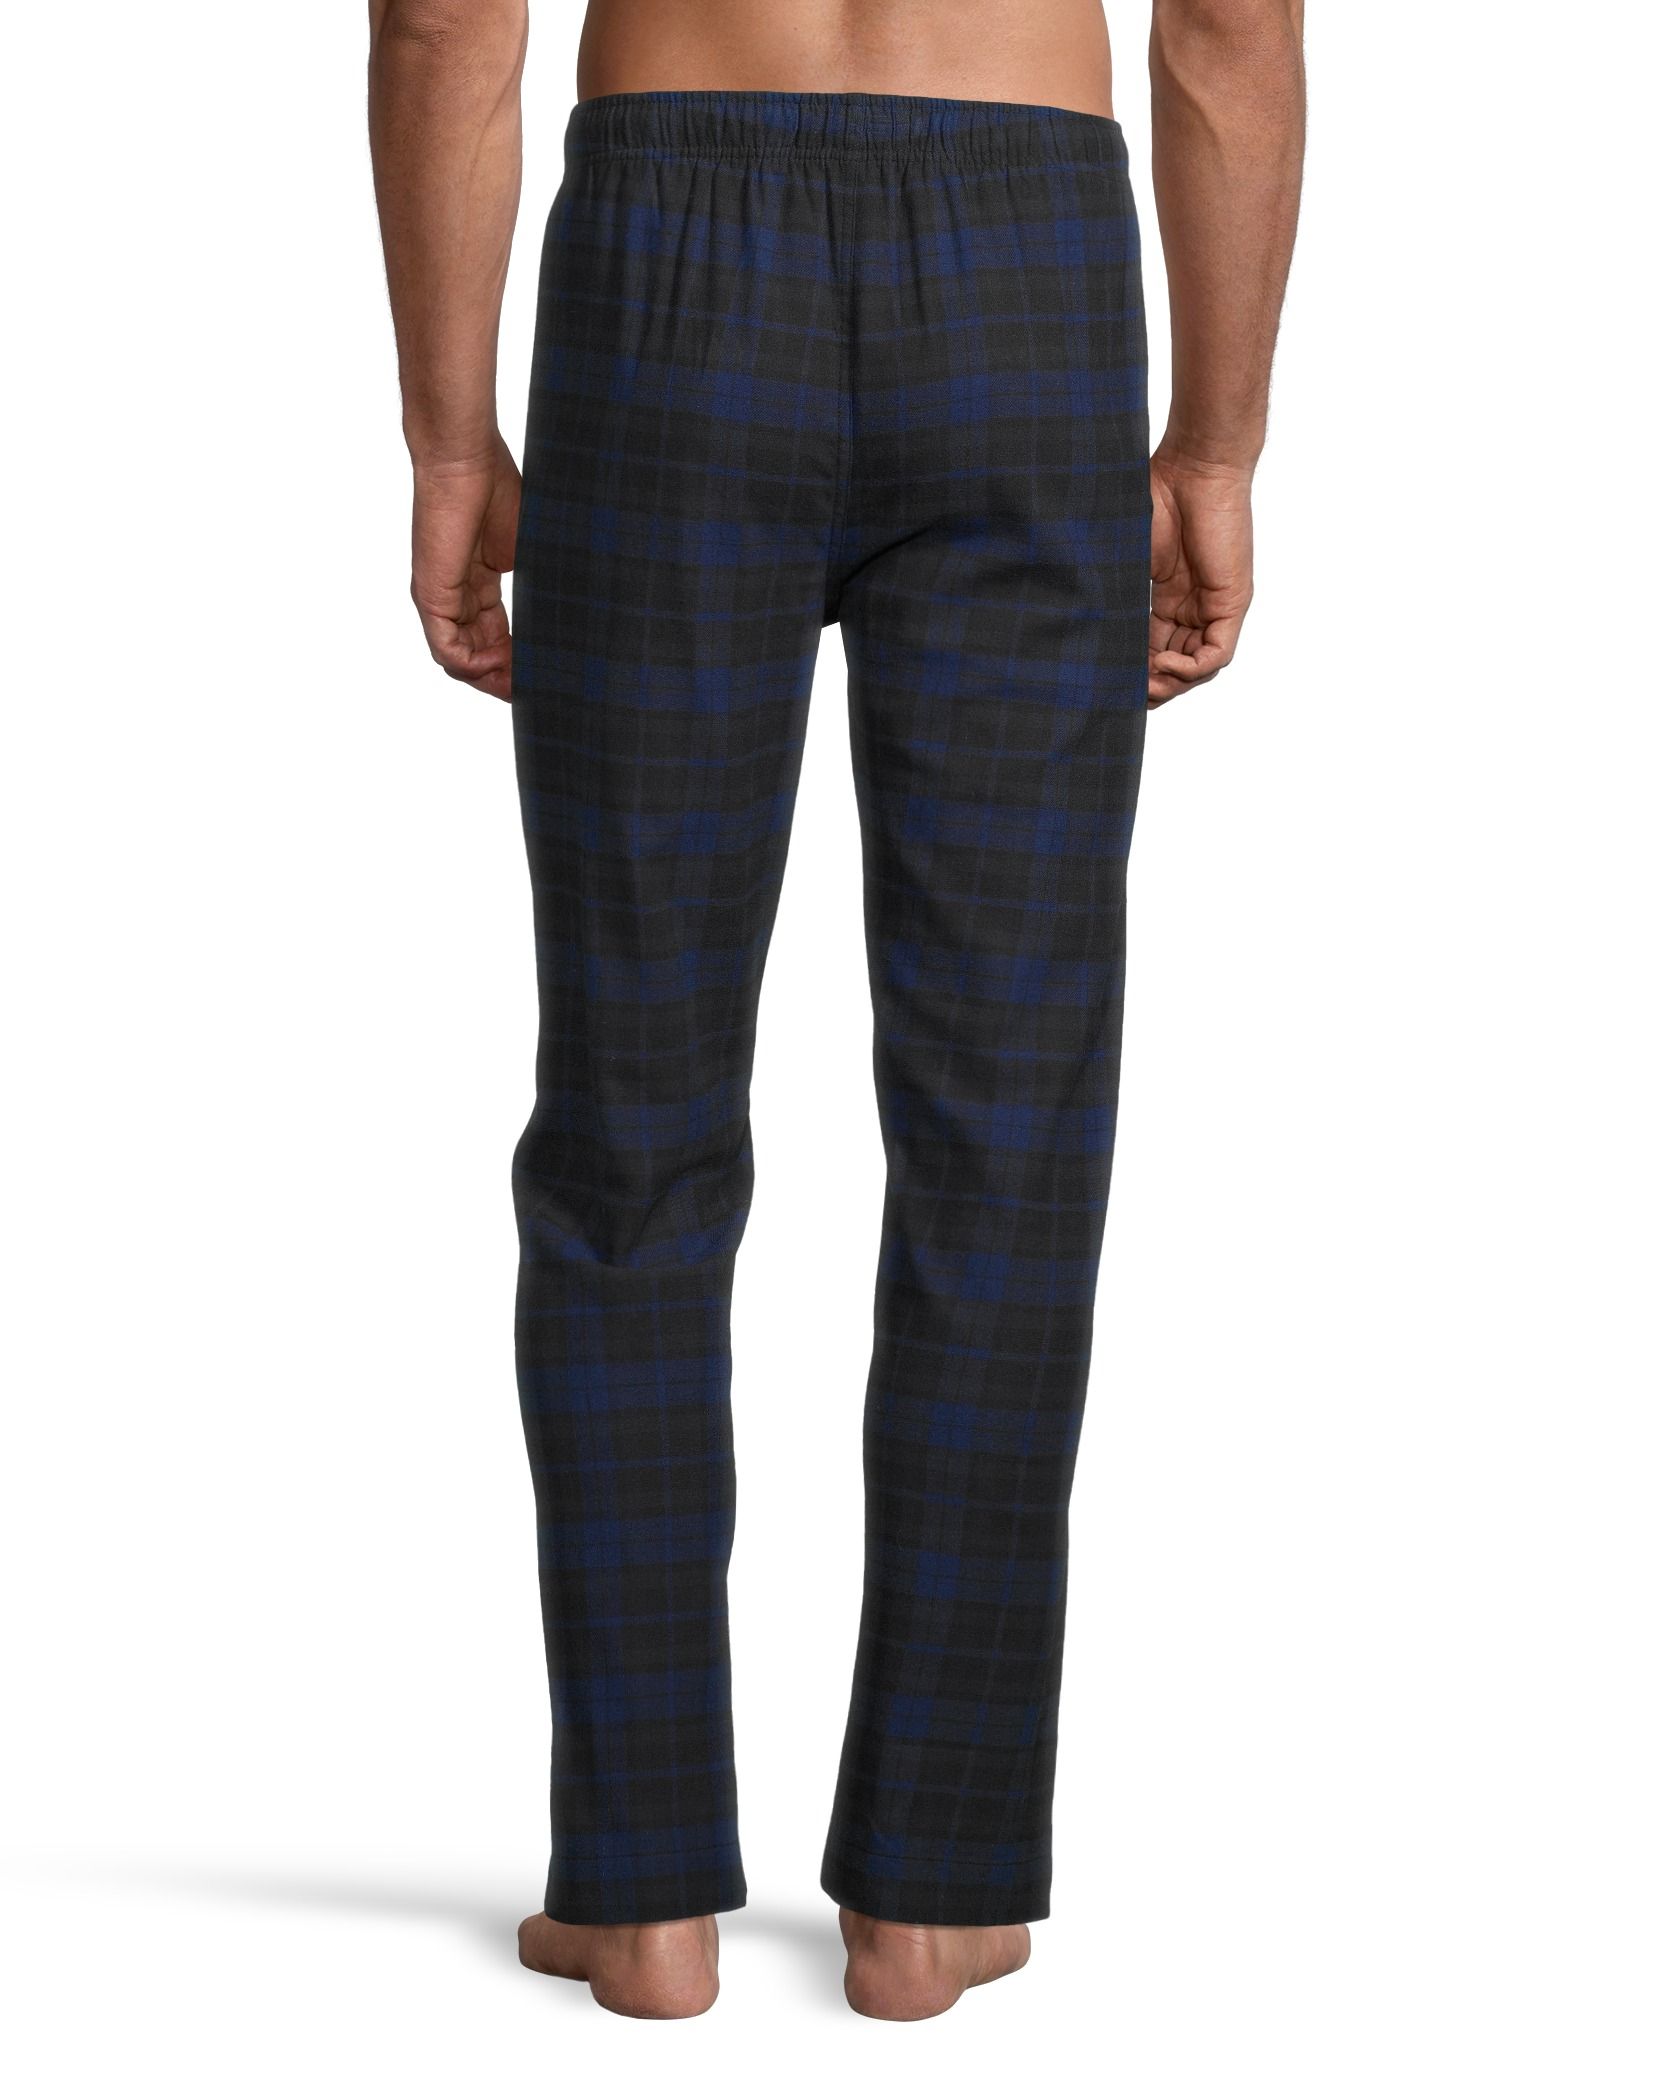 Men's Flannel Pajama Pants 2-Pack, Men's Clearance